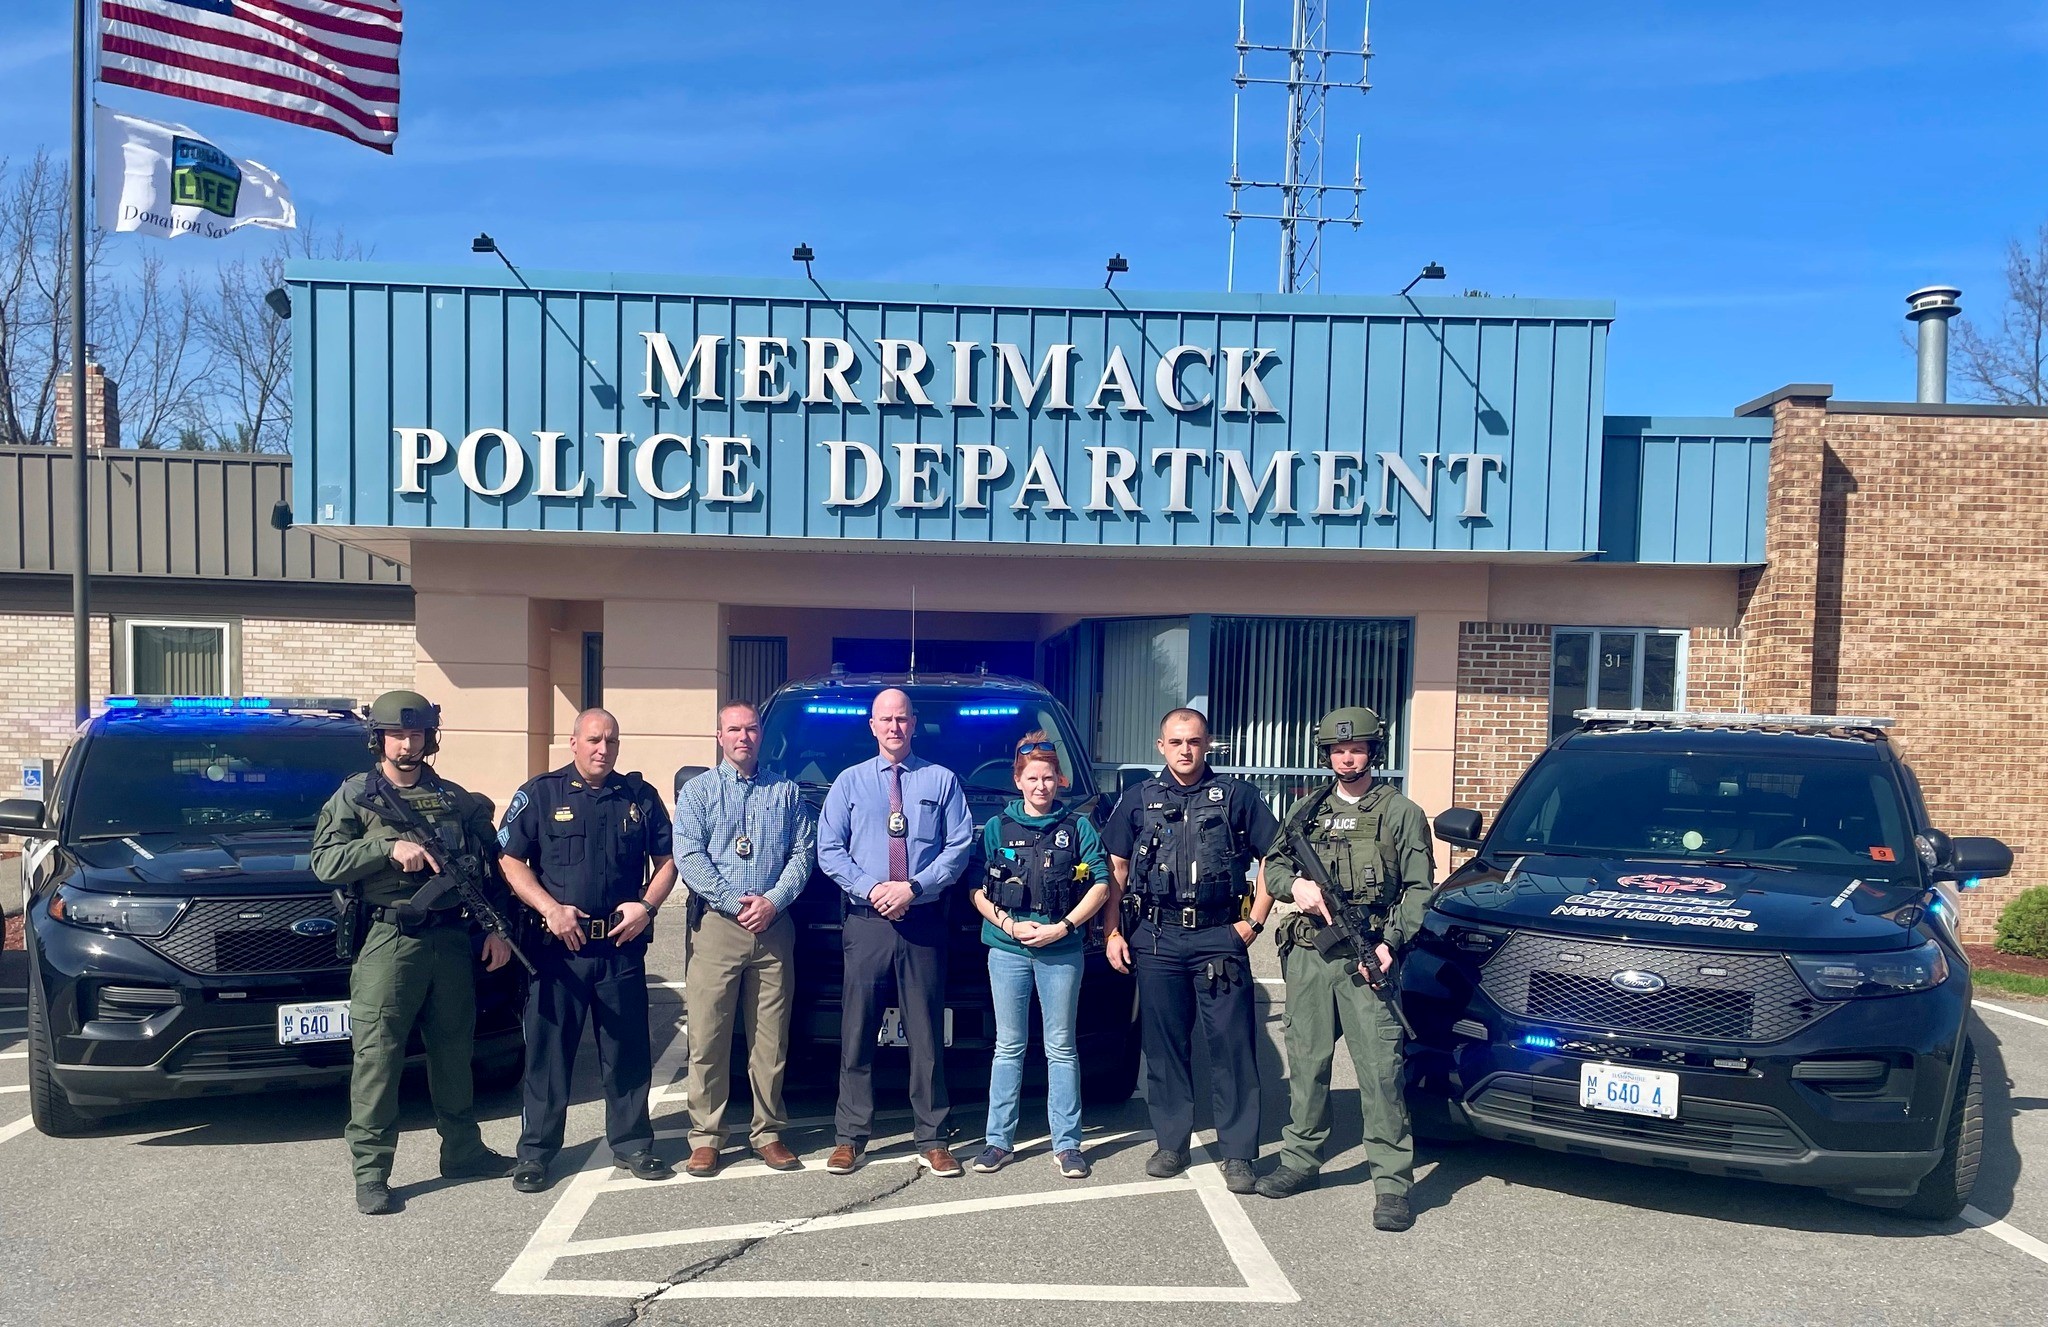 Merrimack Police Department, NH Police Jobs